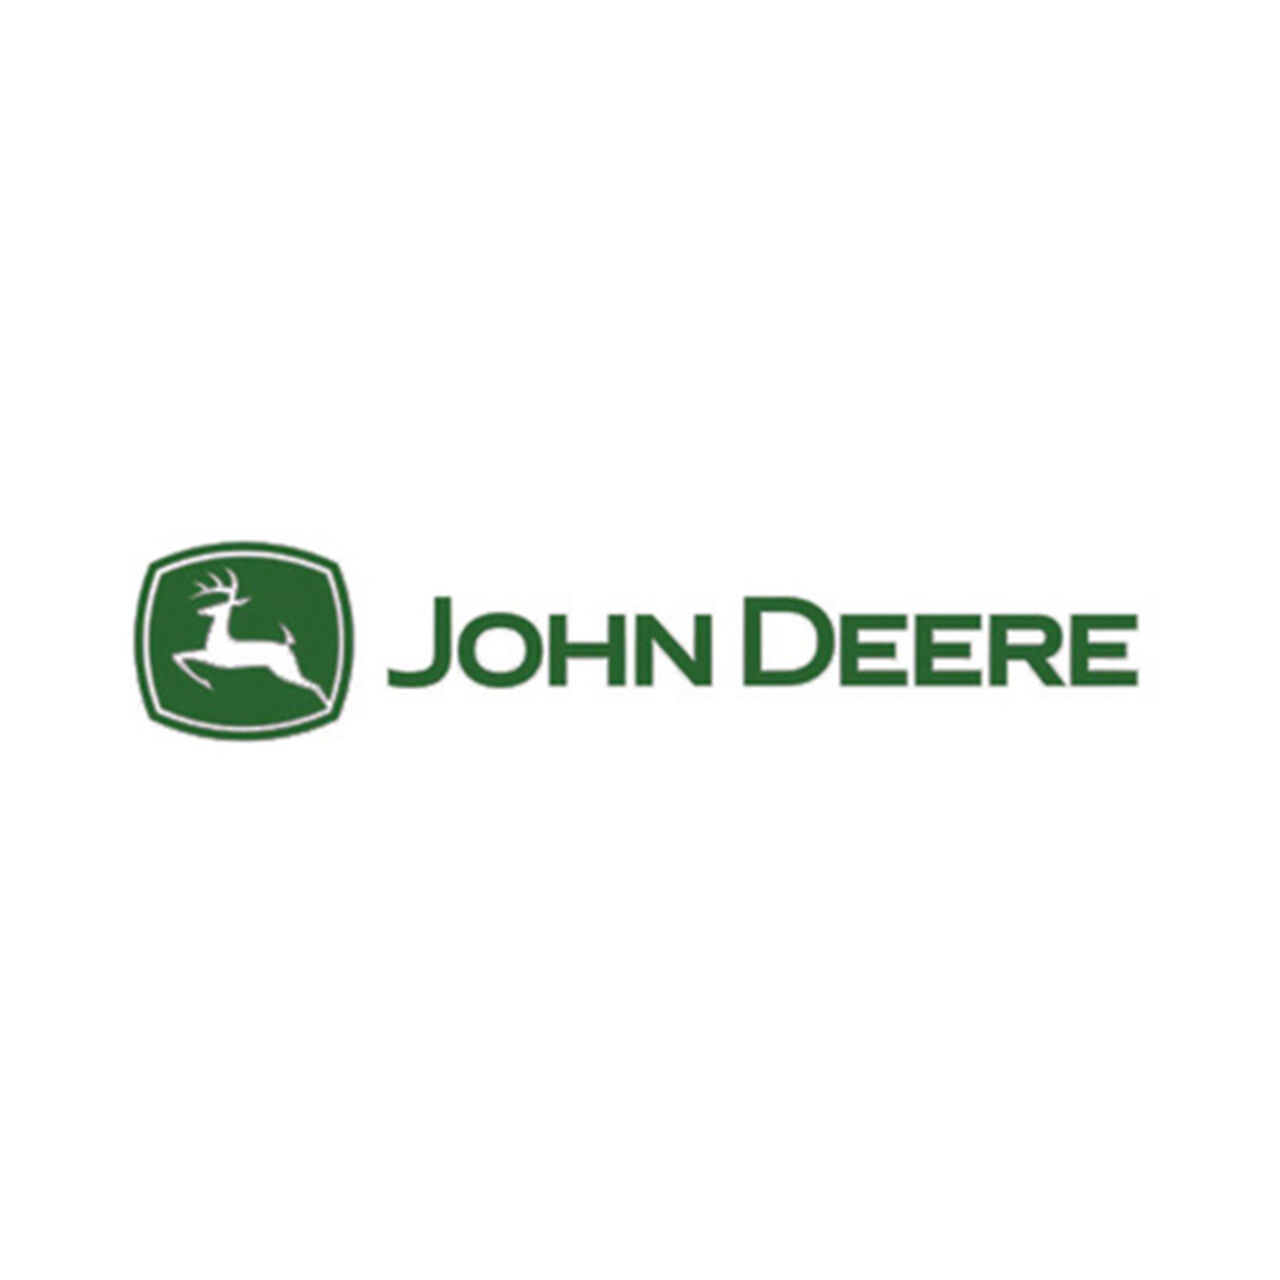 John Deere Rear Window Graphic - LP66183,  image number 0